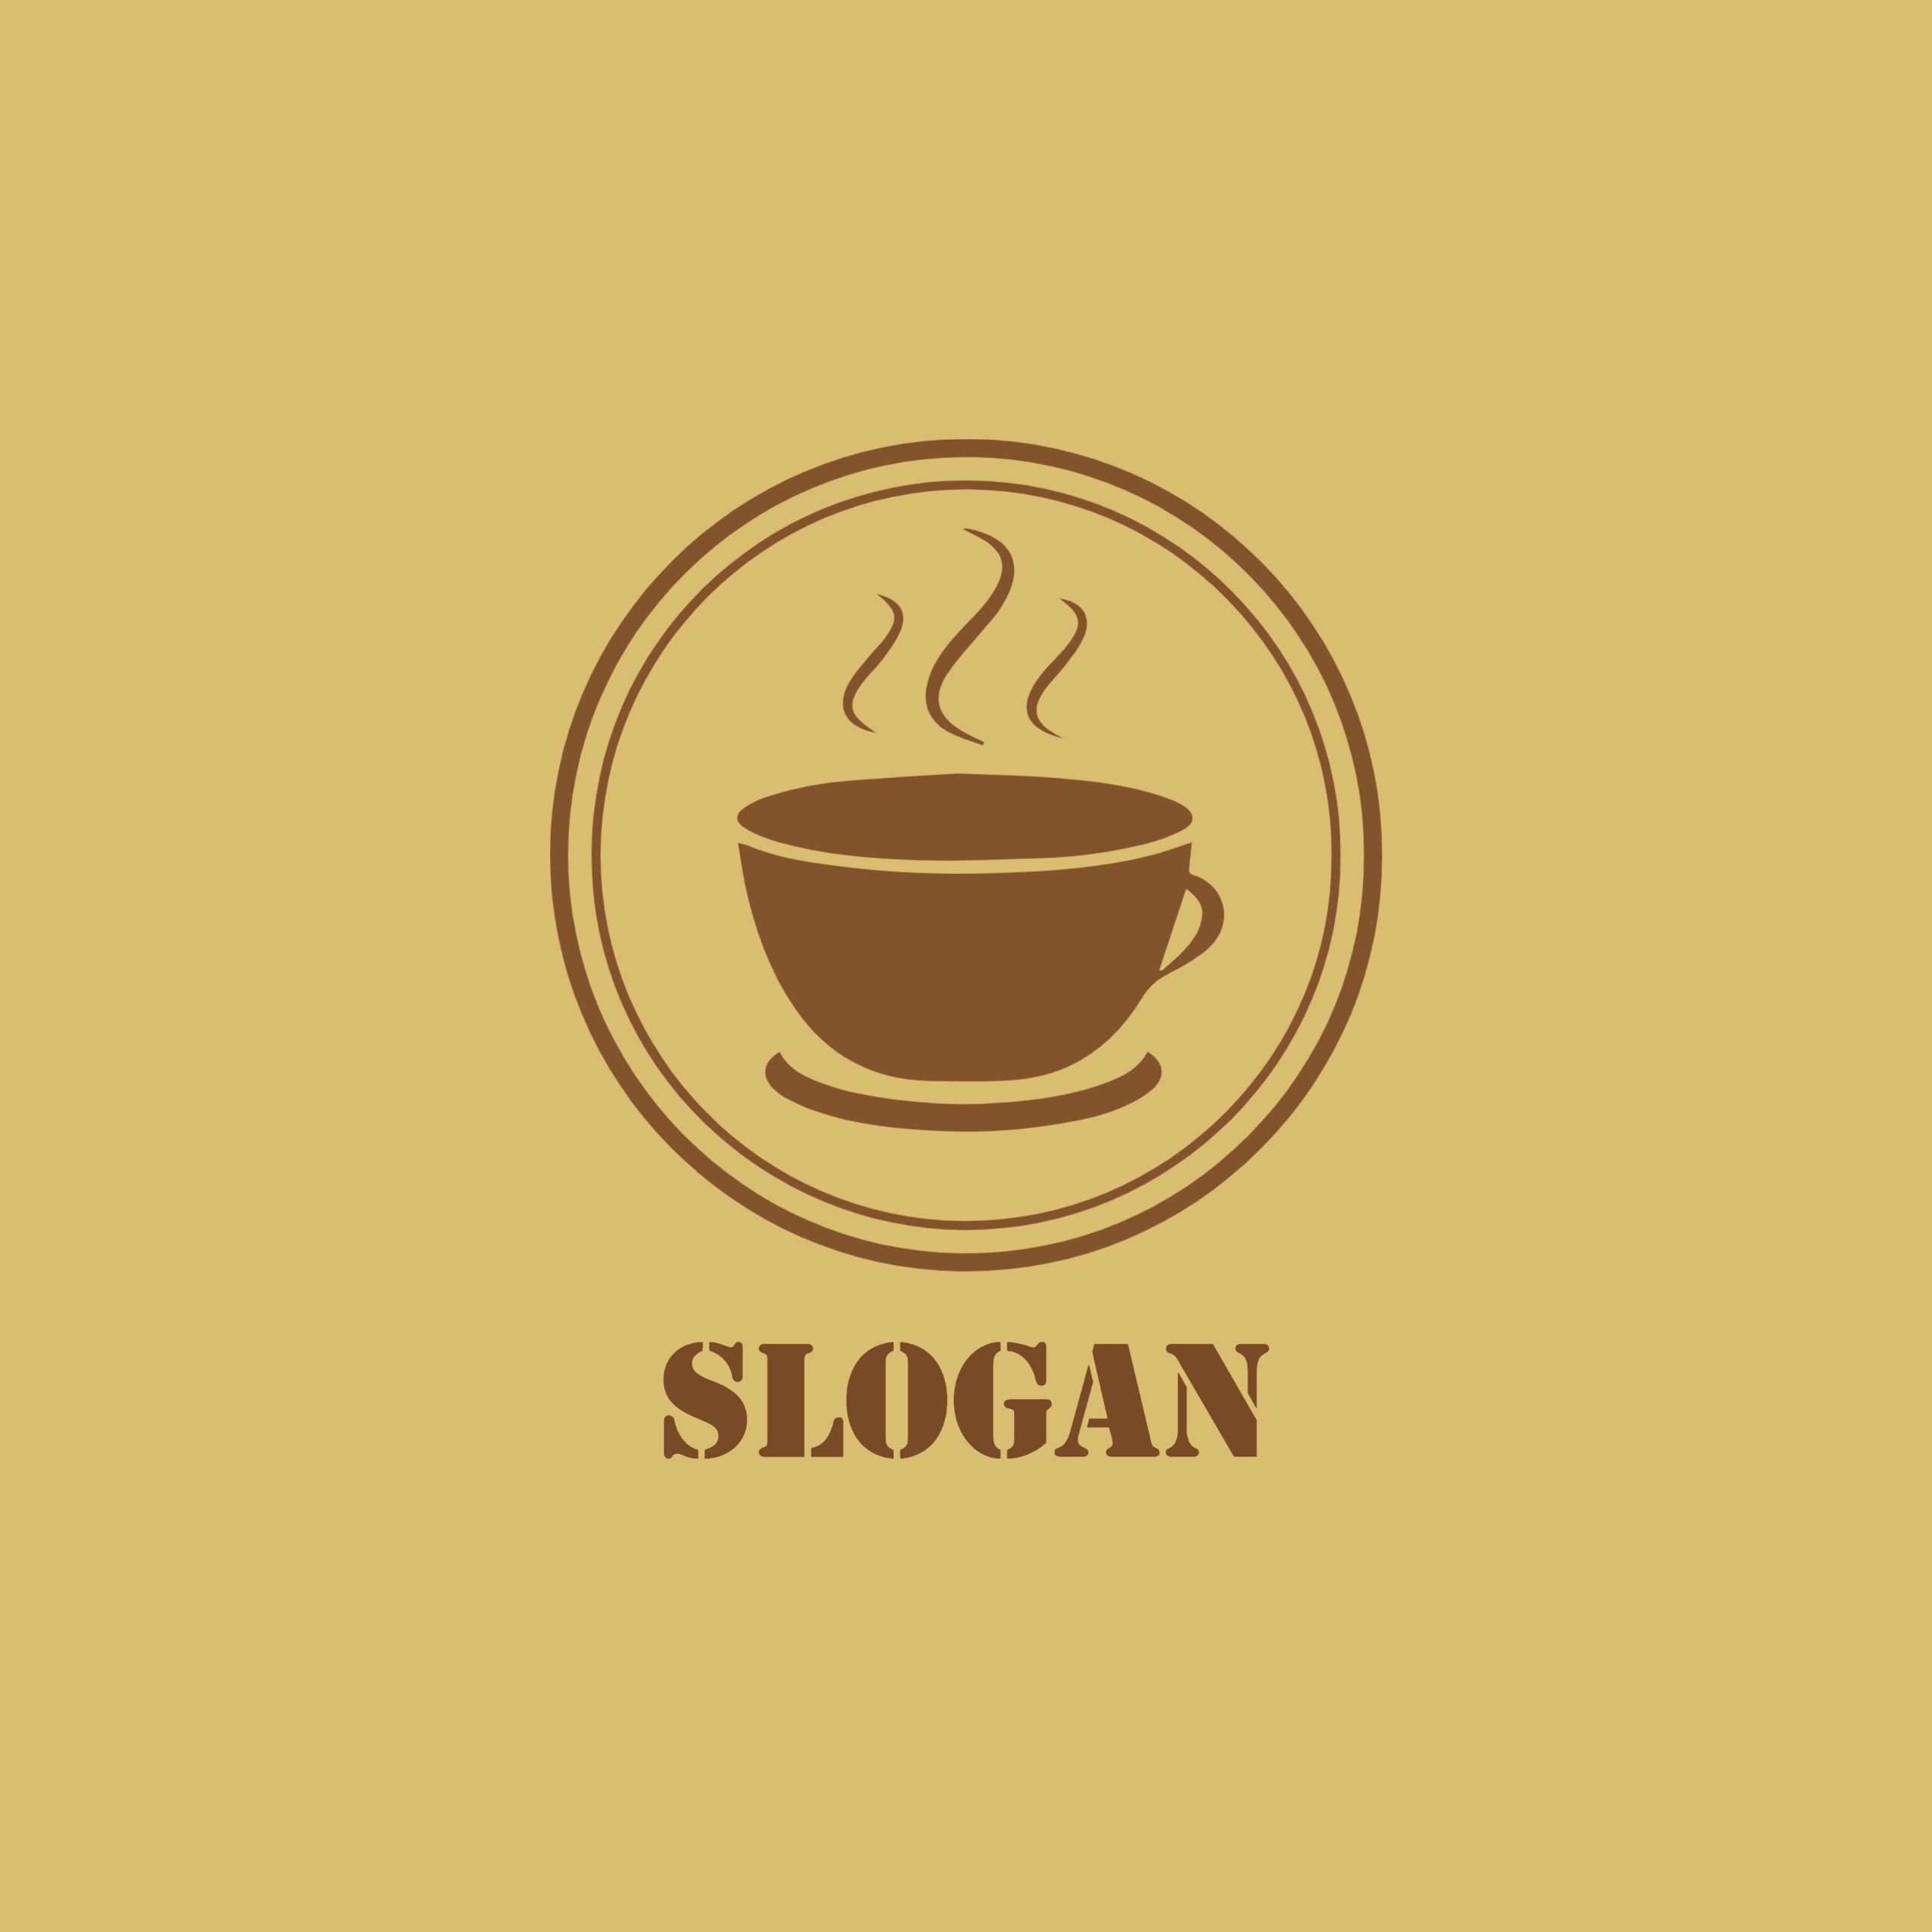 Coffee Cafe Modern Logos Bundle cover image.